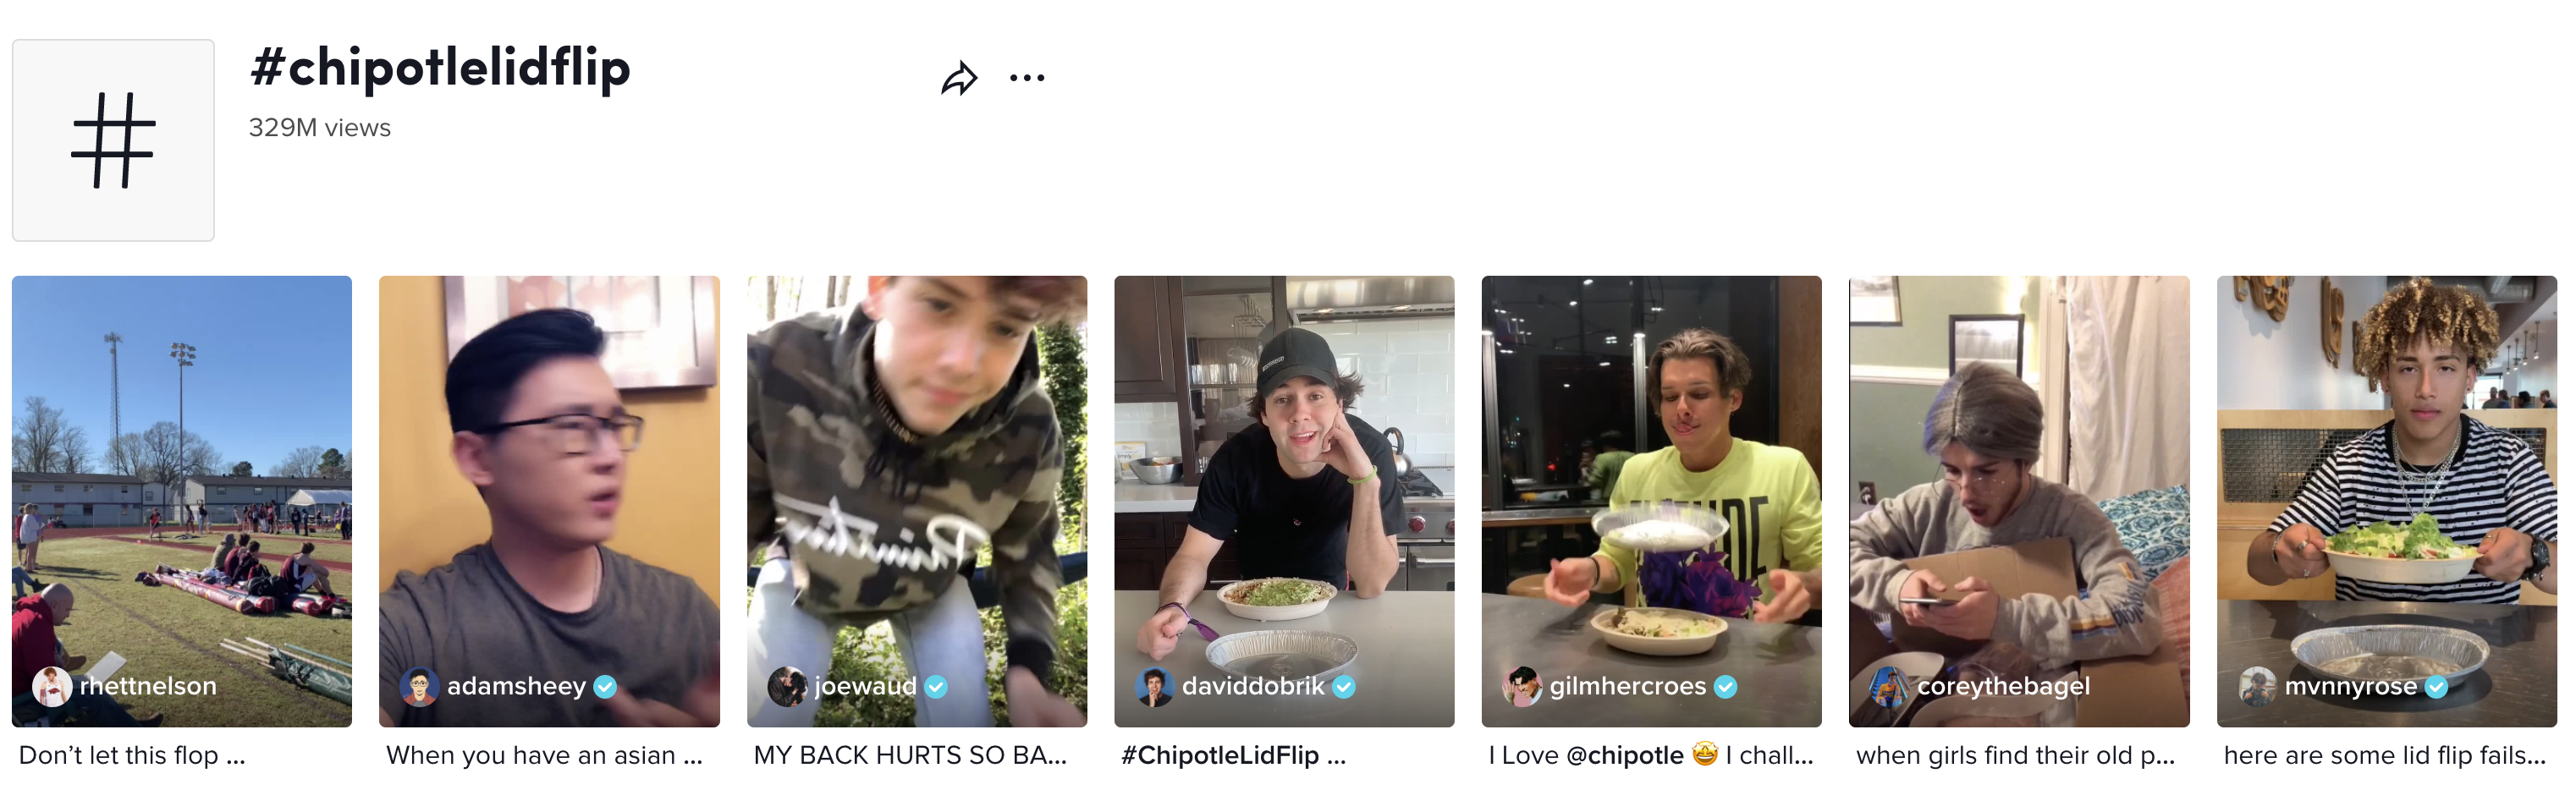 Chipotle lid flip hashtag challenge on TikTok